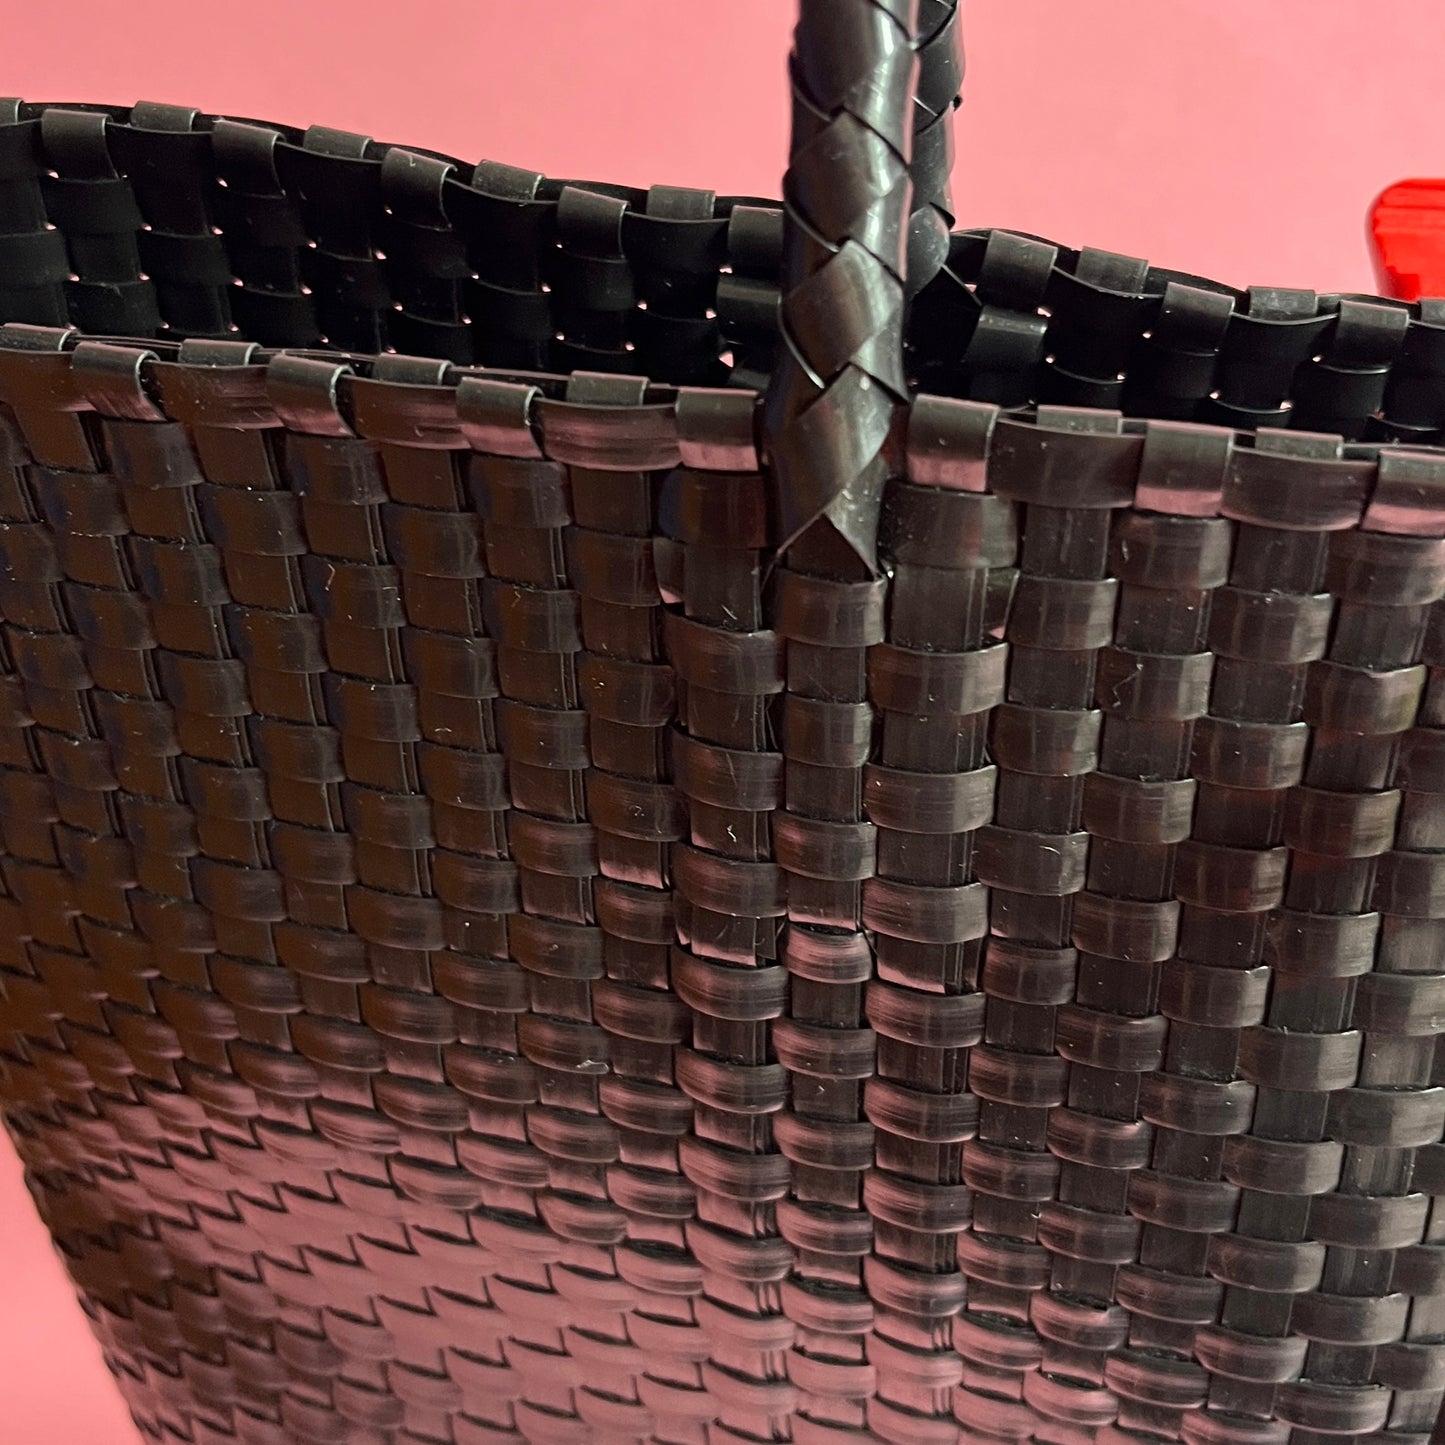 Bicycle Pannier black plastic woven basket medium elastic toggle closure